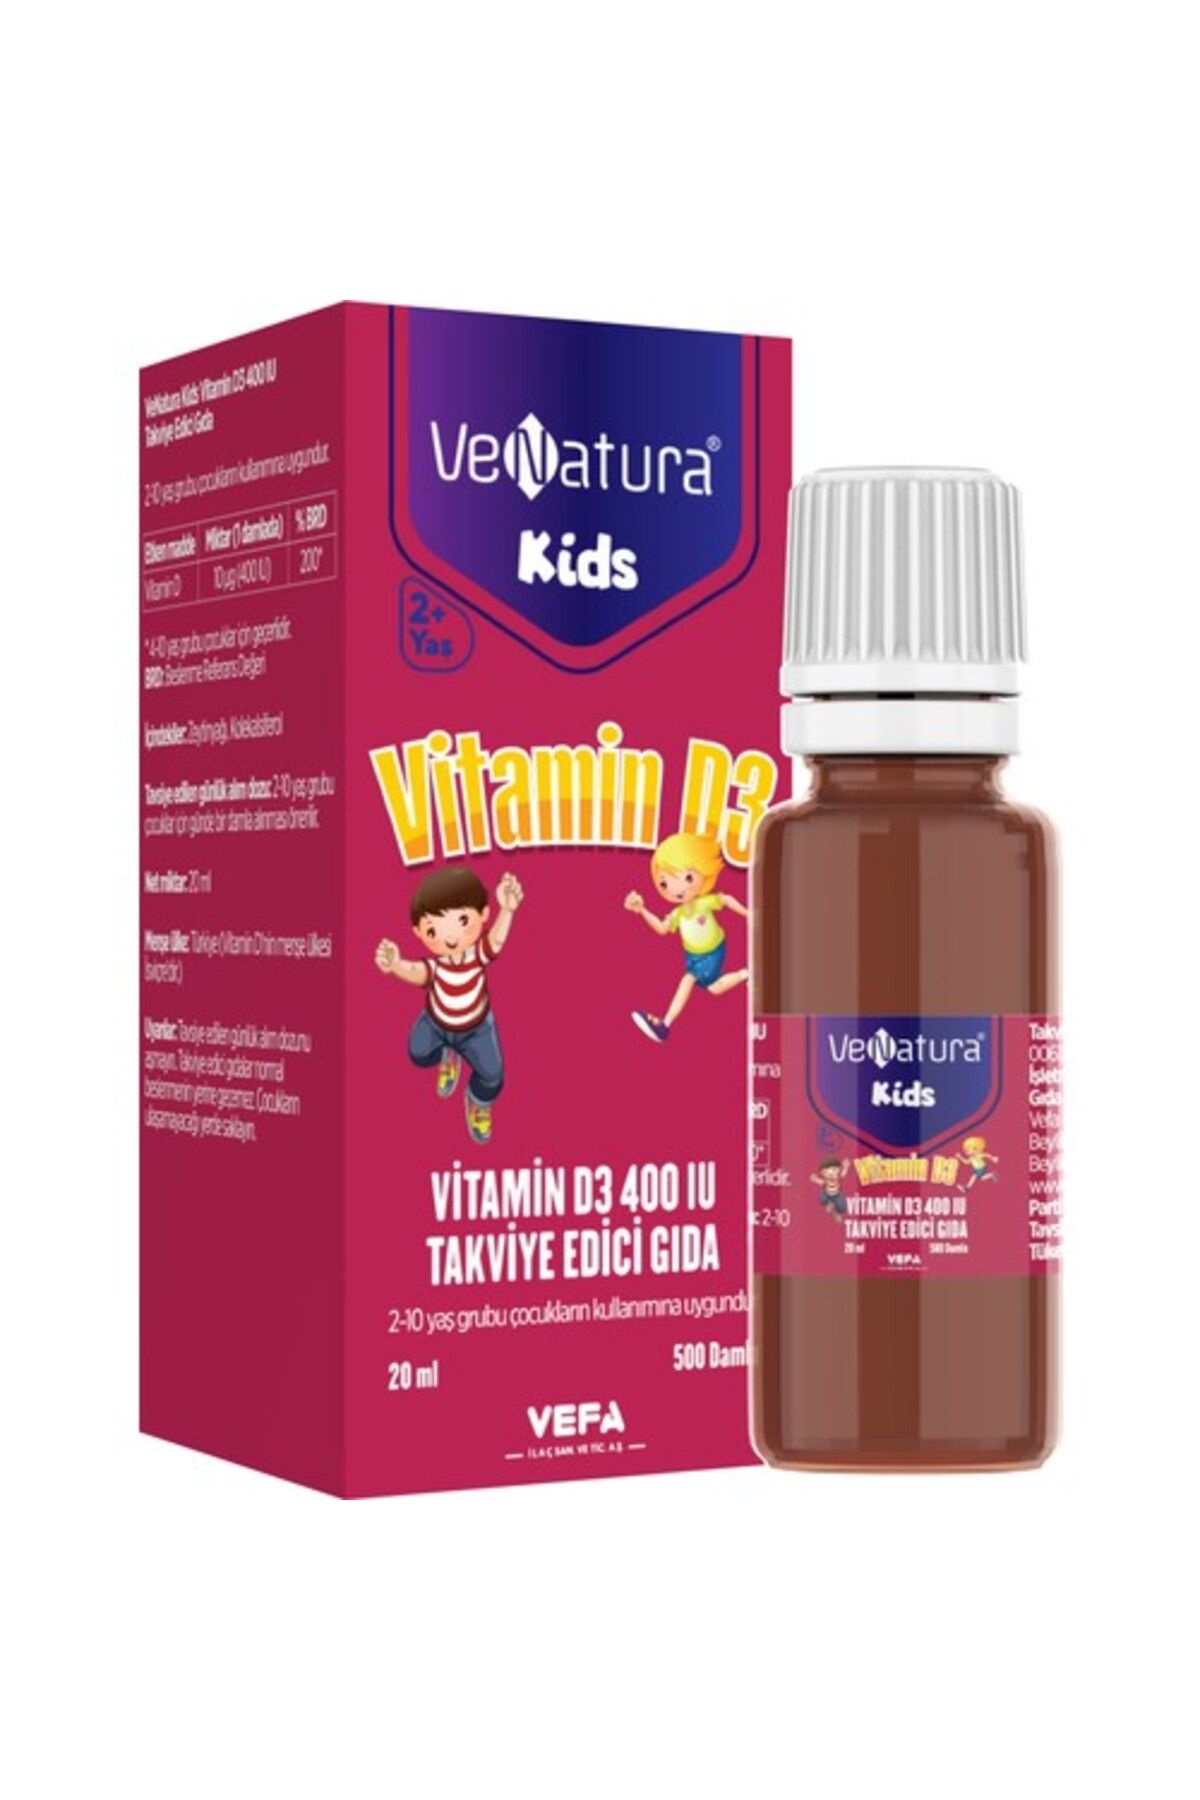 Venatura Vefa Vitamin Kids D3 400 Iu